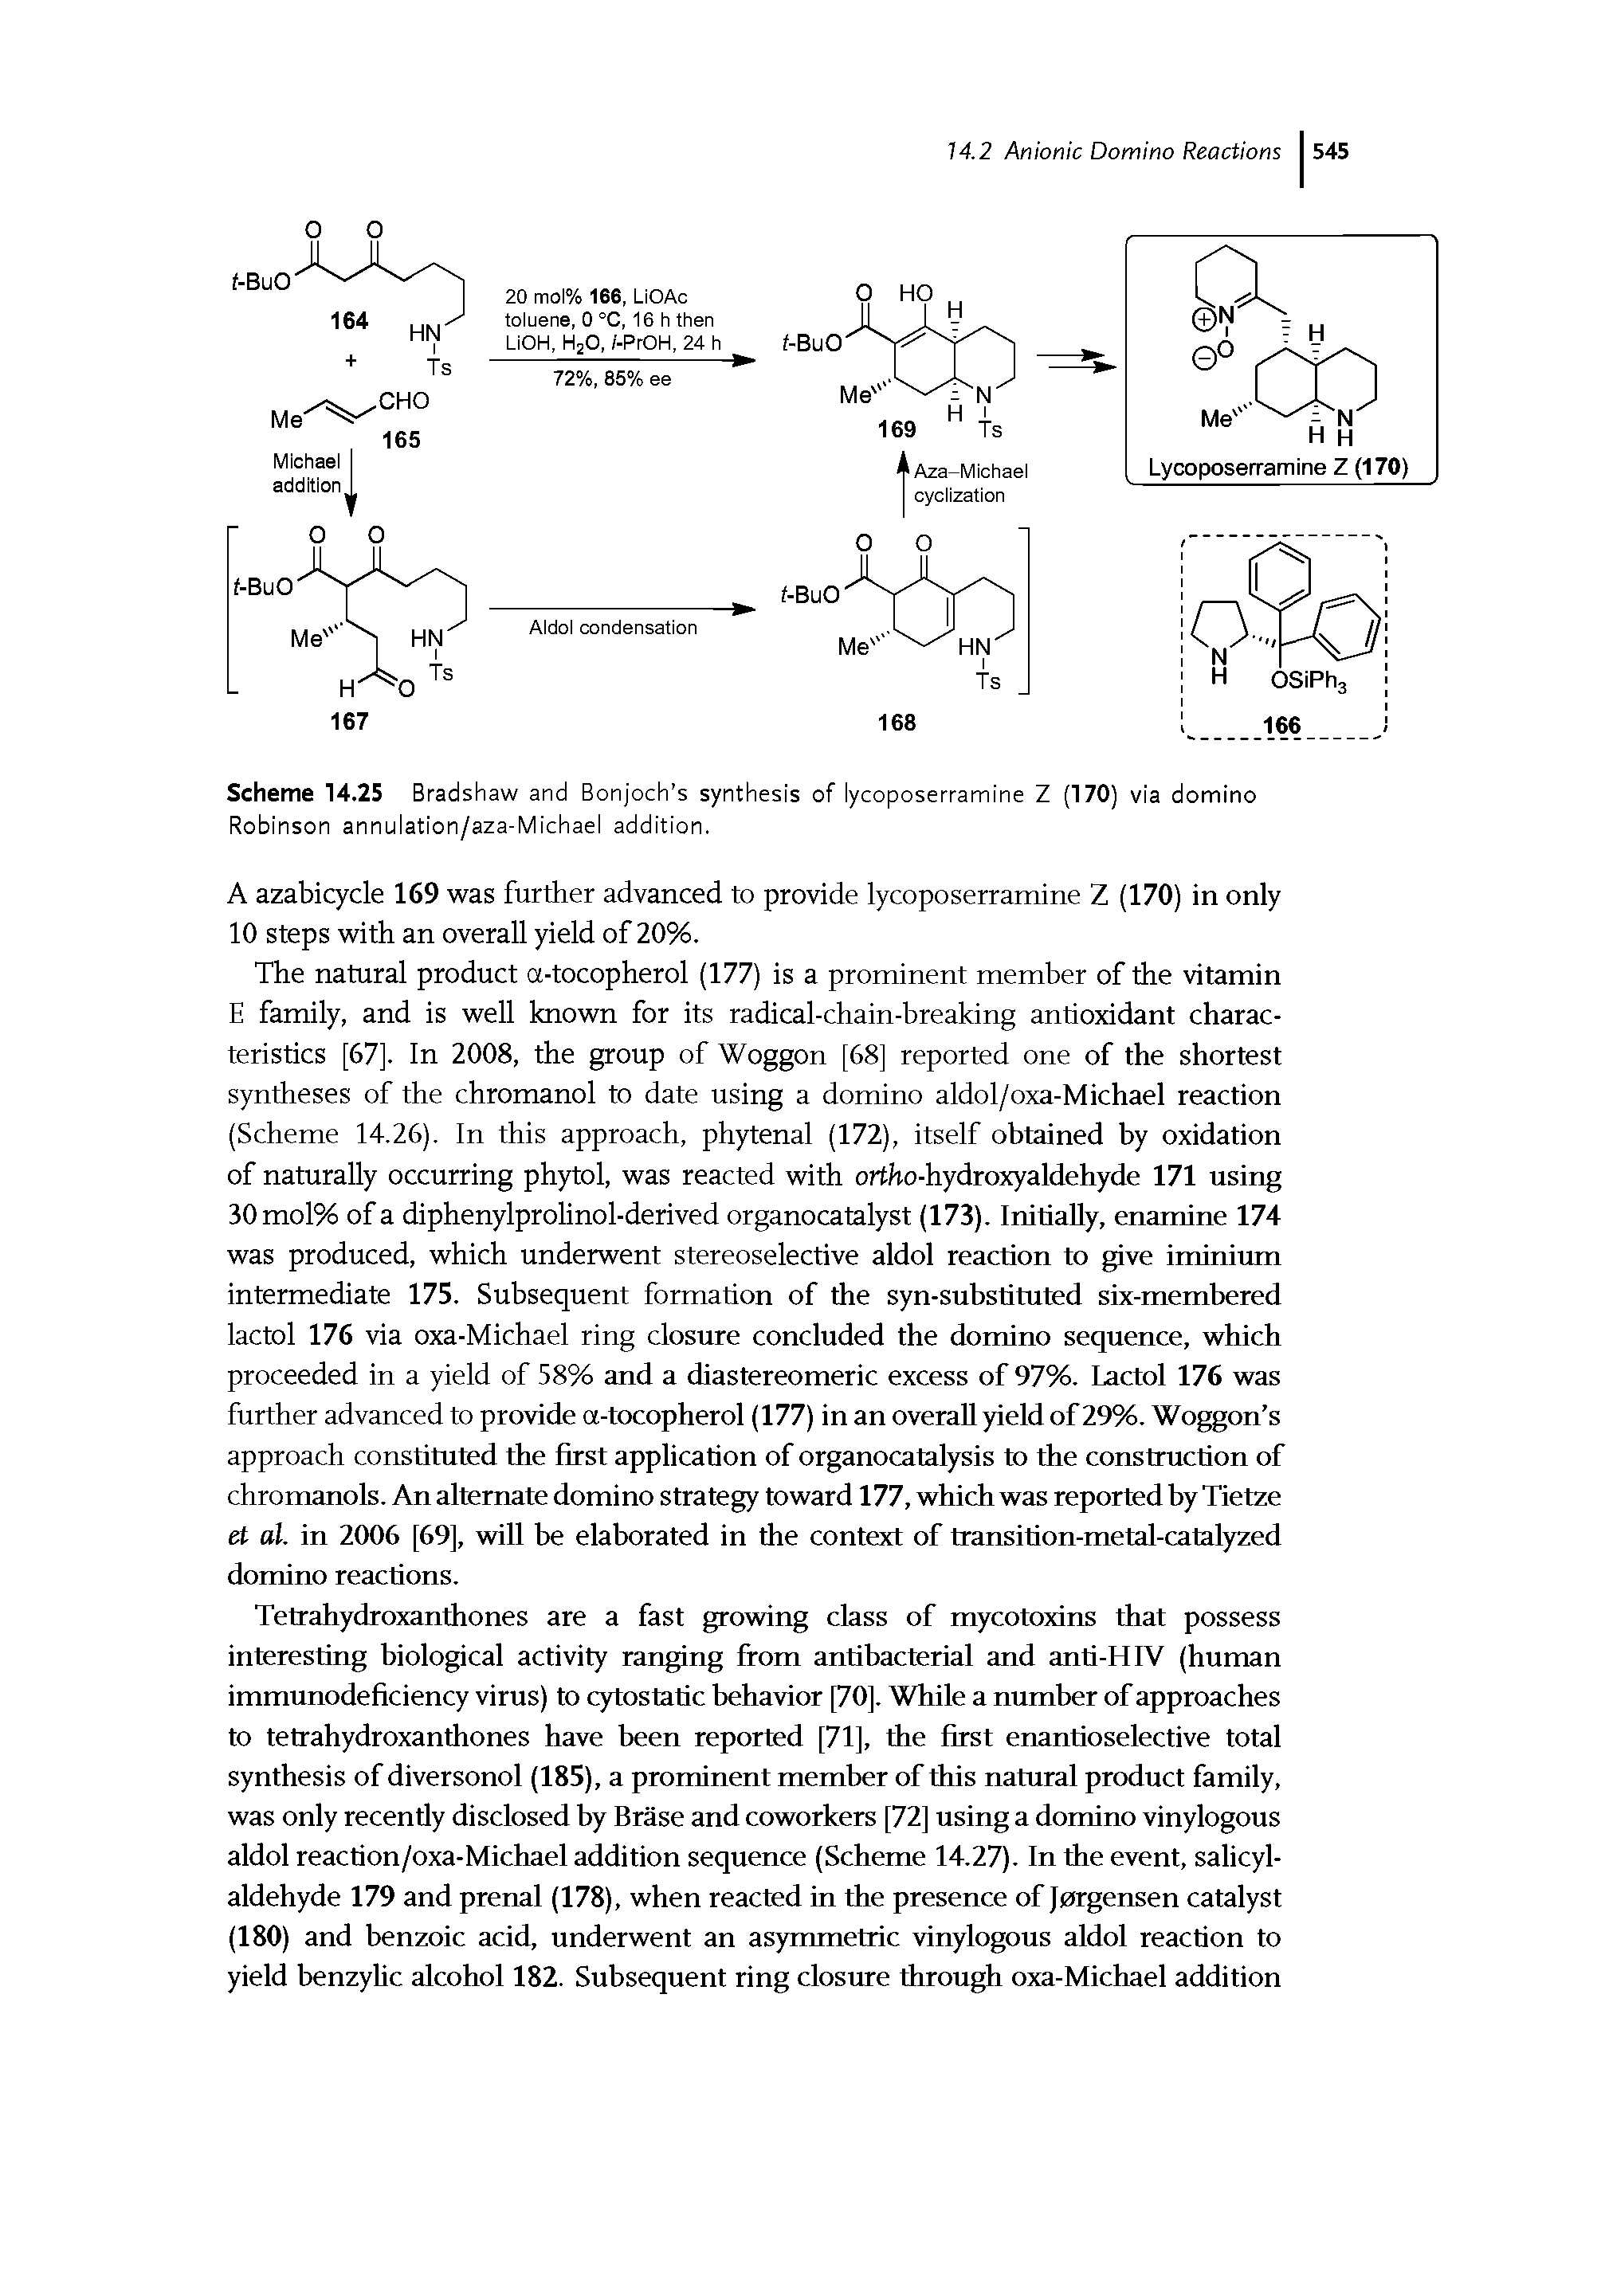 Scheme 14.25 Bradshaw and Bonjoch s synthesis of lycoposerramine Z (170) via domino Robinson annulation/aza-Michael addition.